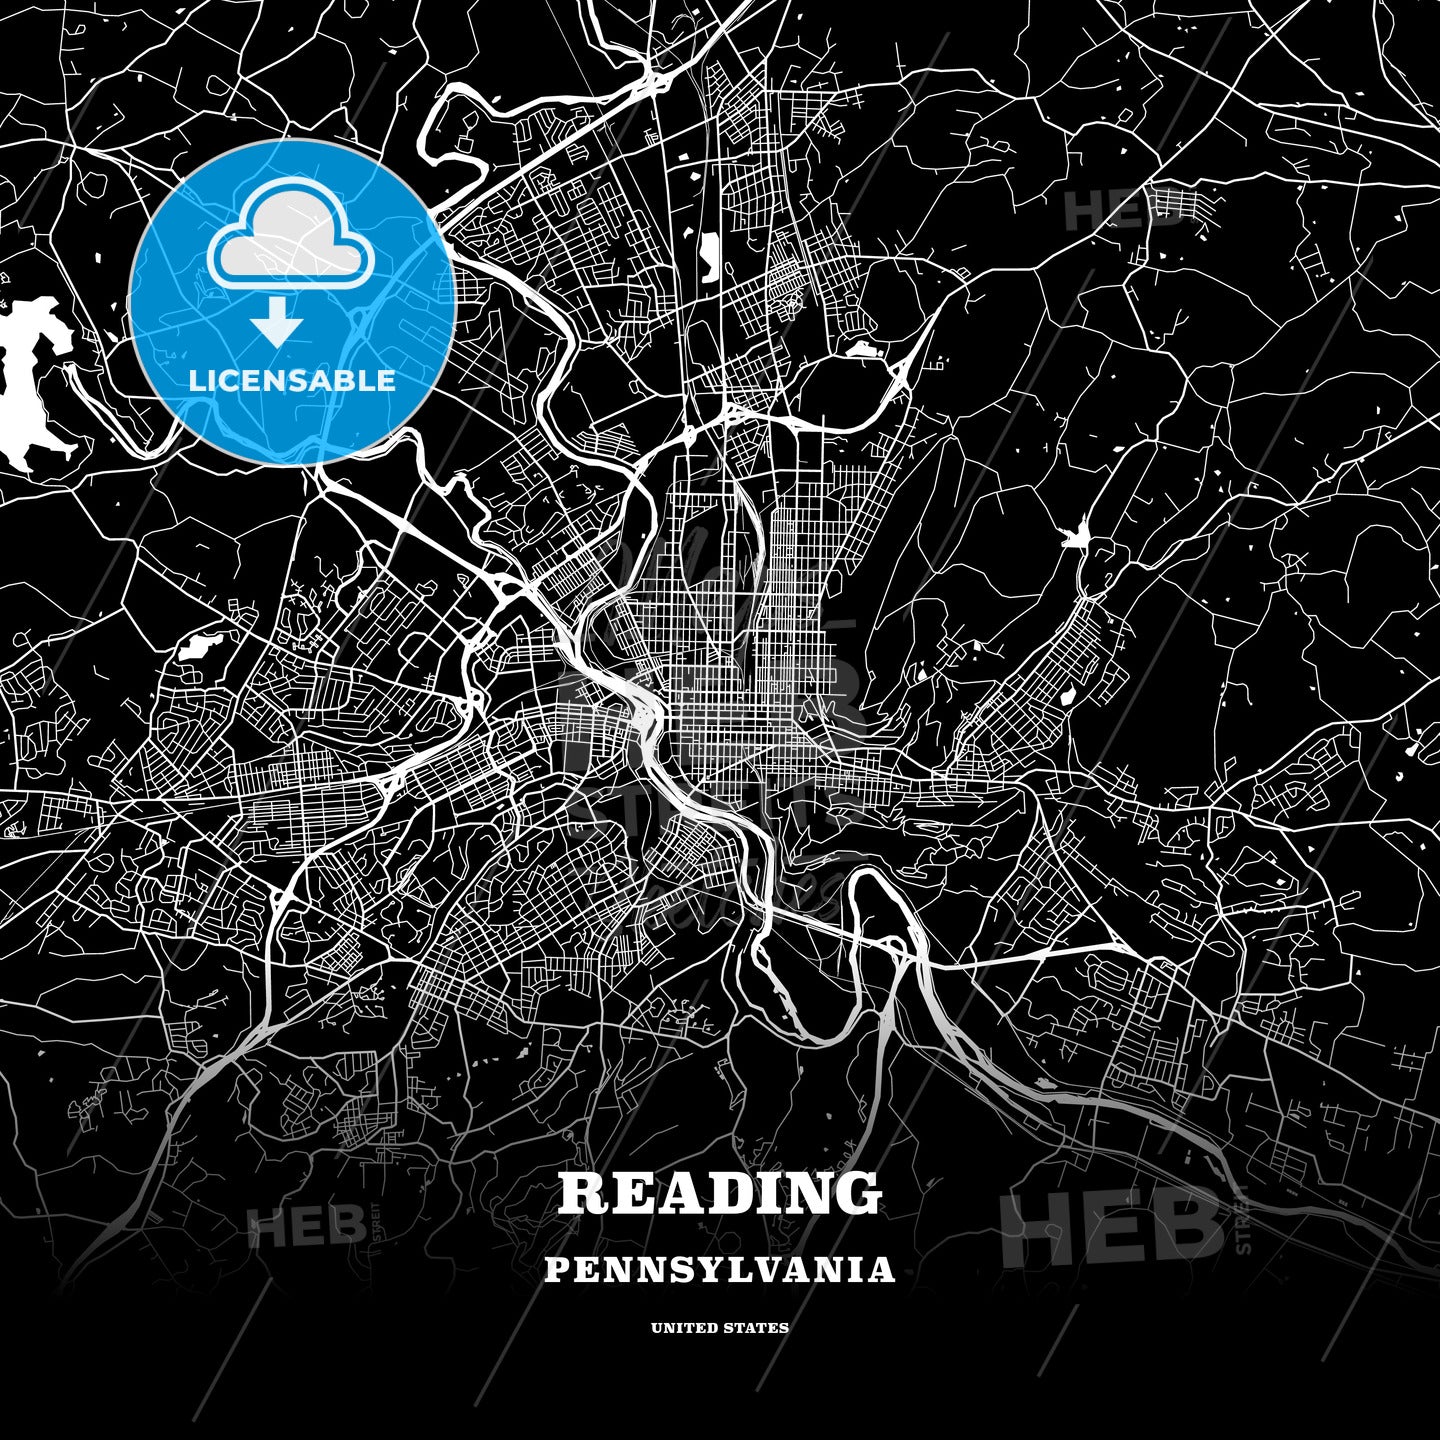 Reading, Pennsylvania, USA map